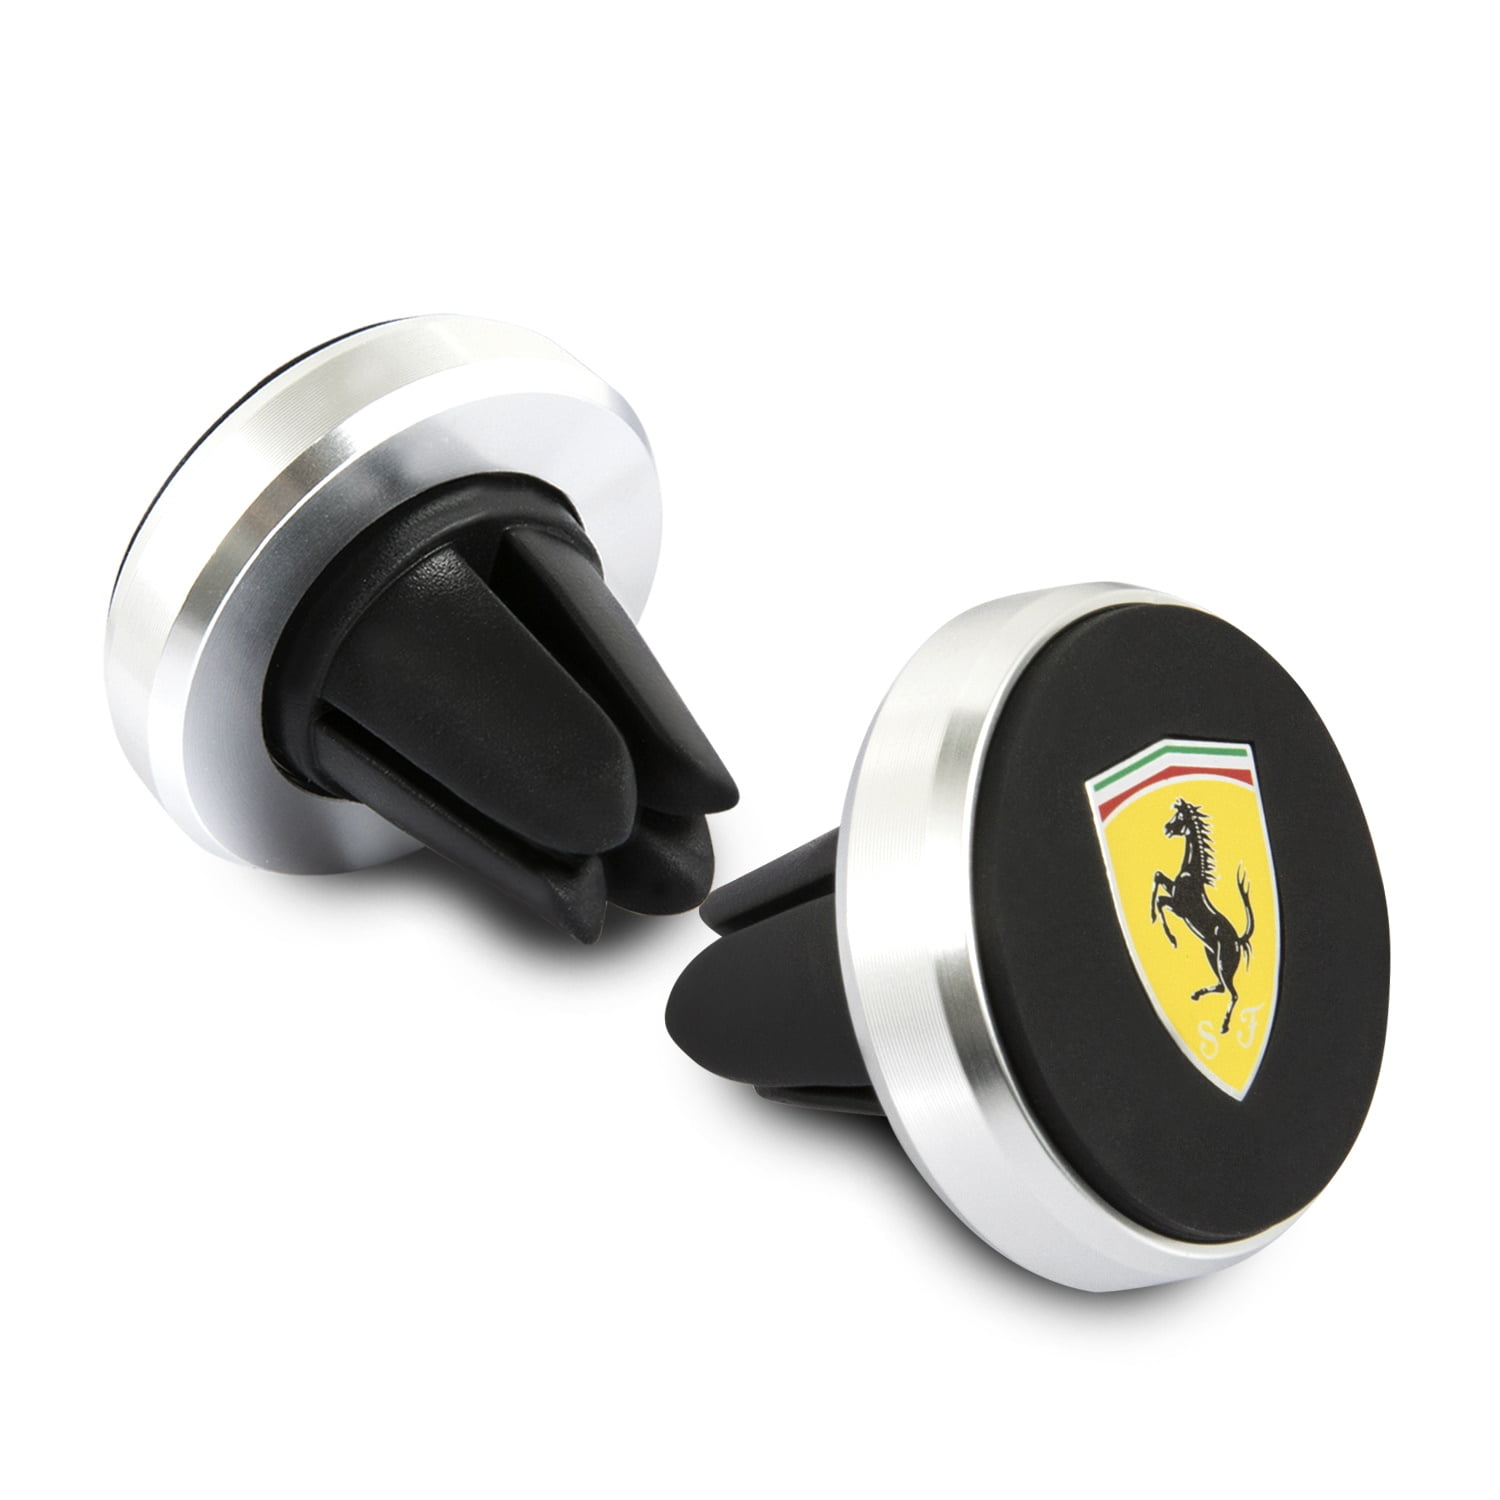 Ferrari Phone Holder Air Vent Mount Μαγνητική βάση στήριξης Smartphone αεραγωγών (Μαύρη/Ασημί)